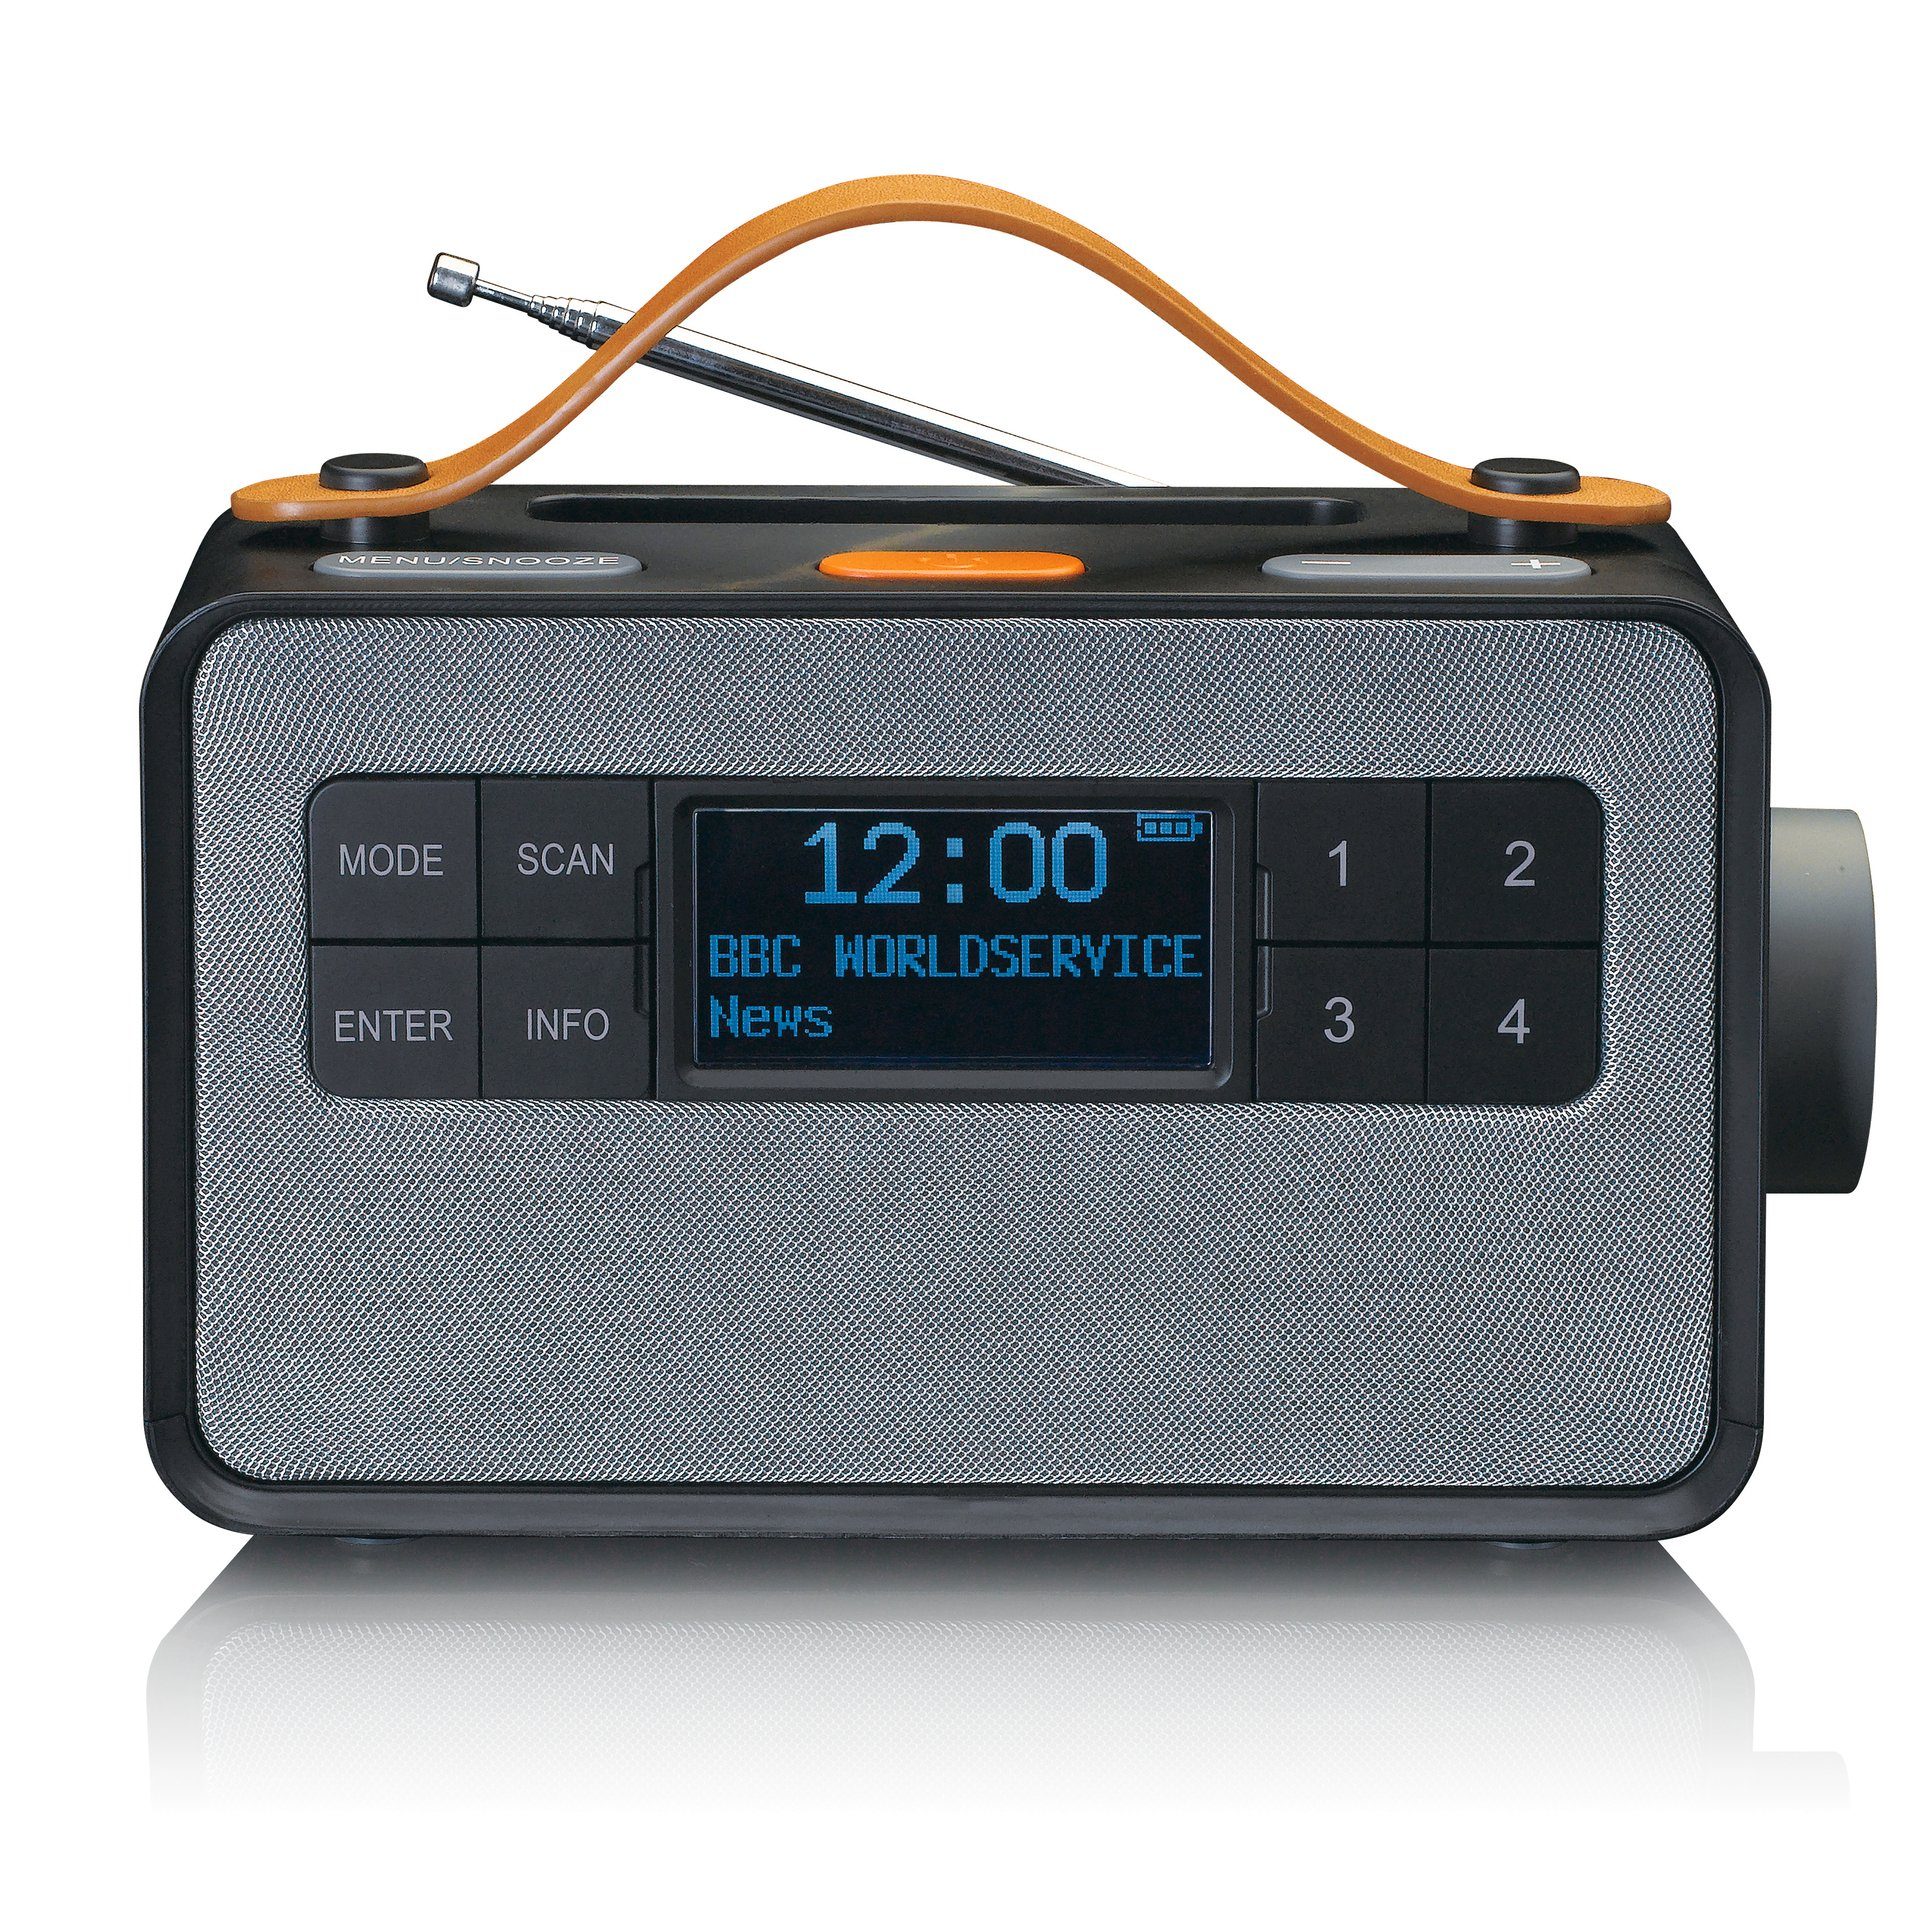 Lenco Digitalradio PDR-065 (DAB) schwarz